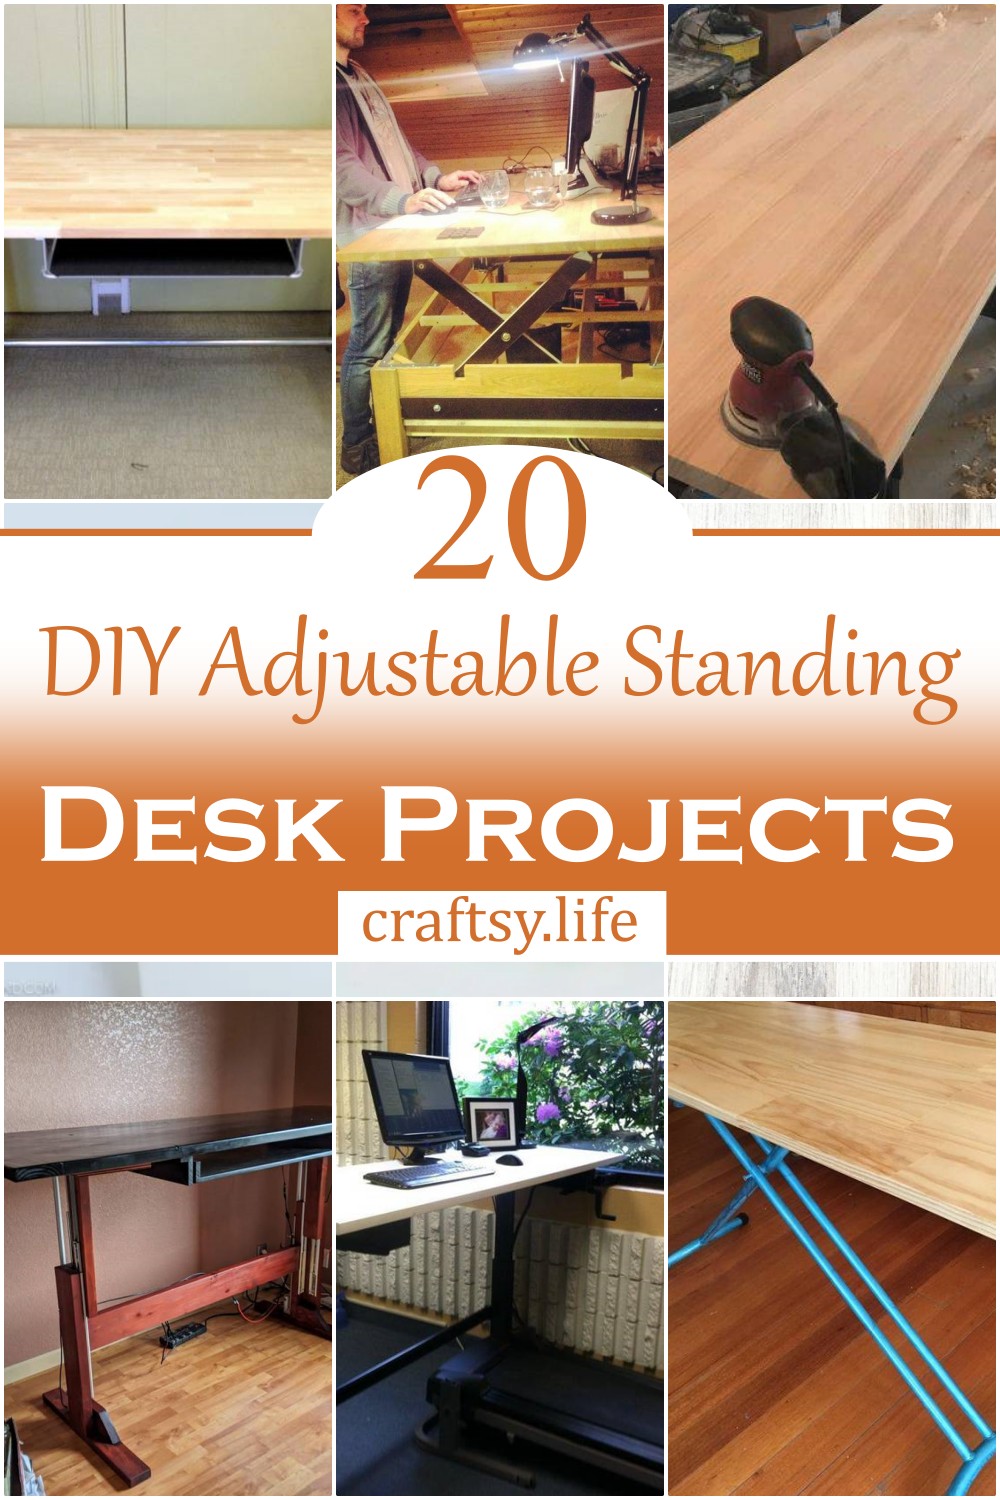 DIY Adjustable Standing Desk Projects